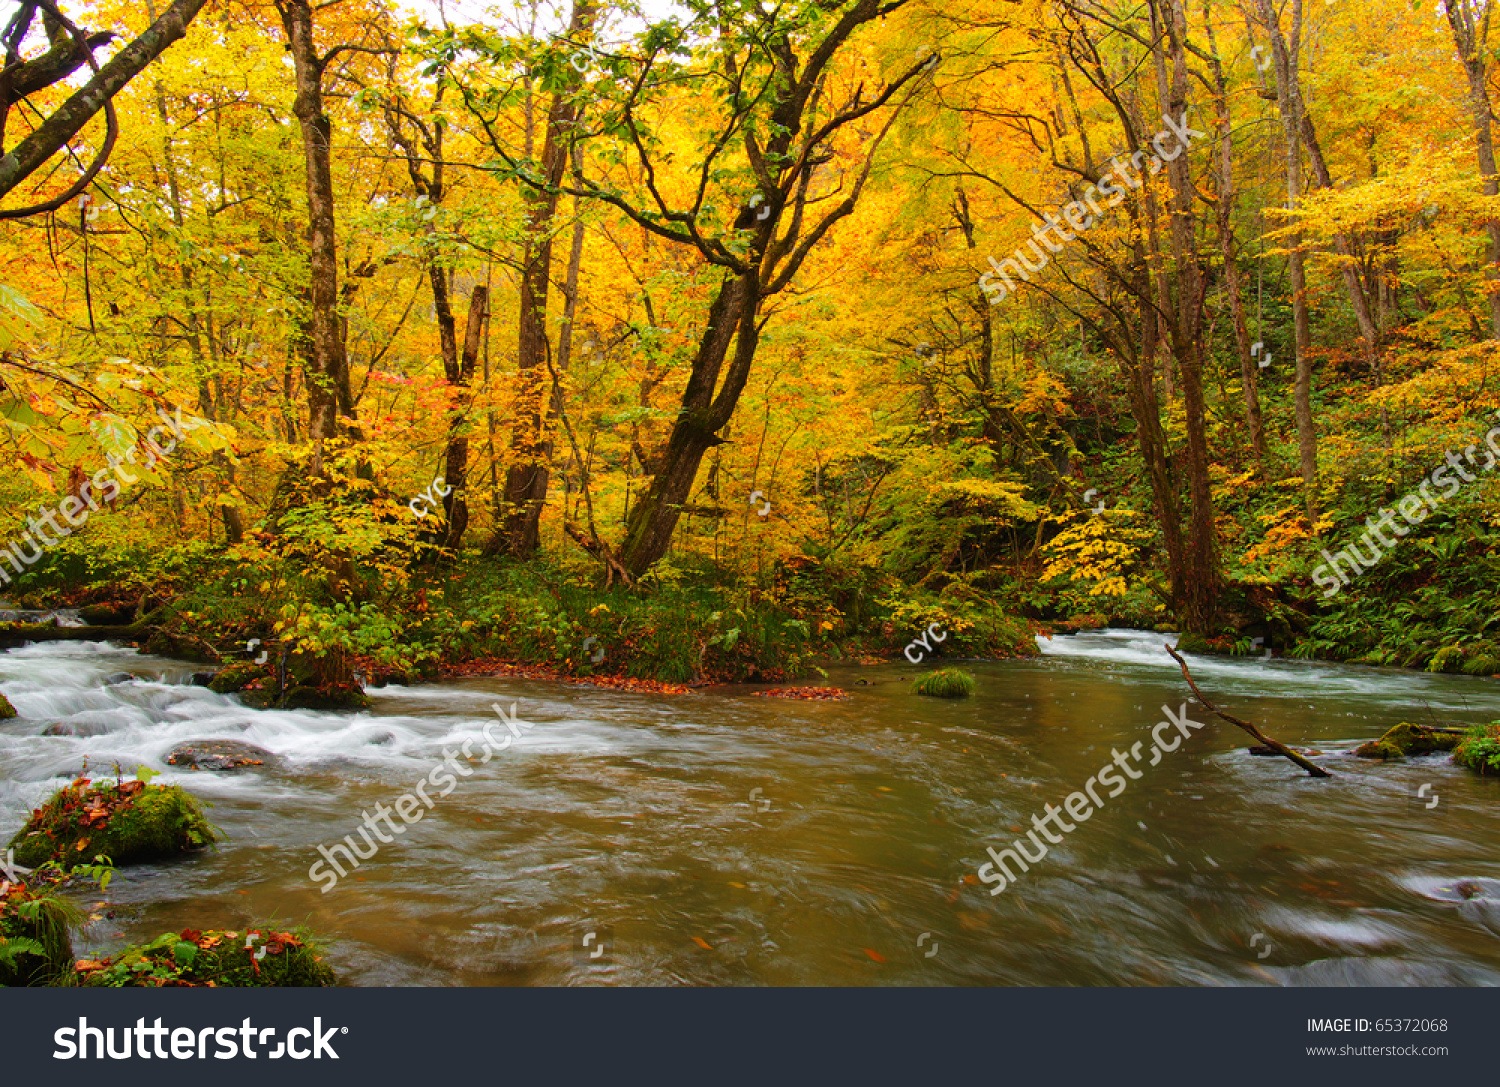 Autumn Colors of Oirase River, located at Aomori Prefecture Japan #65372068